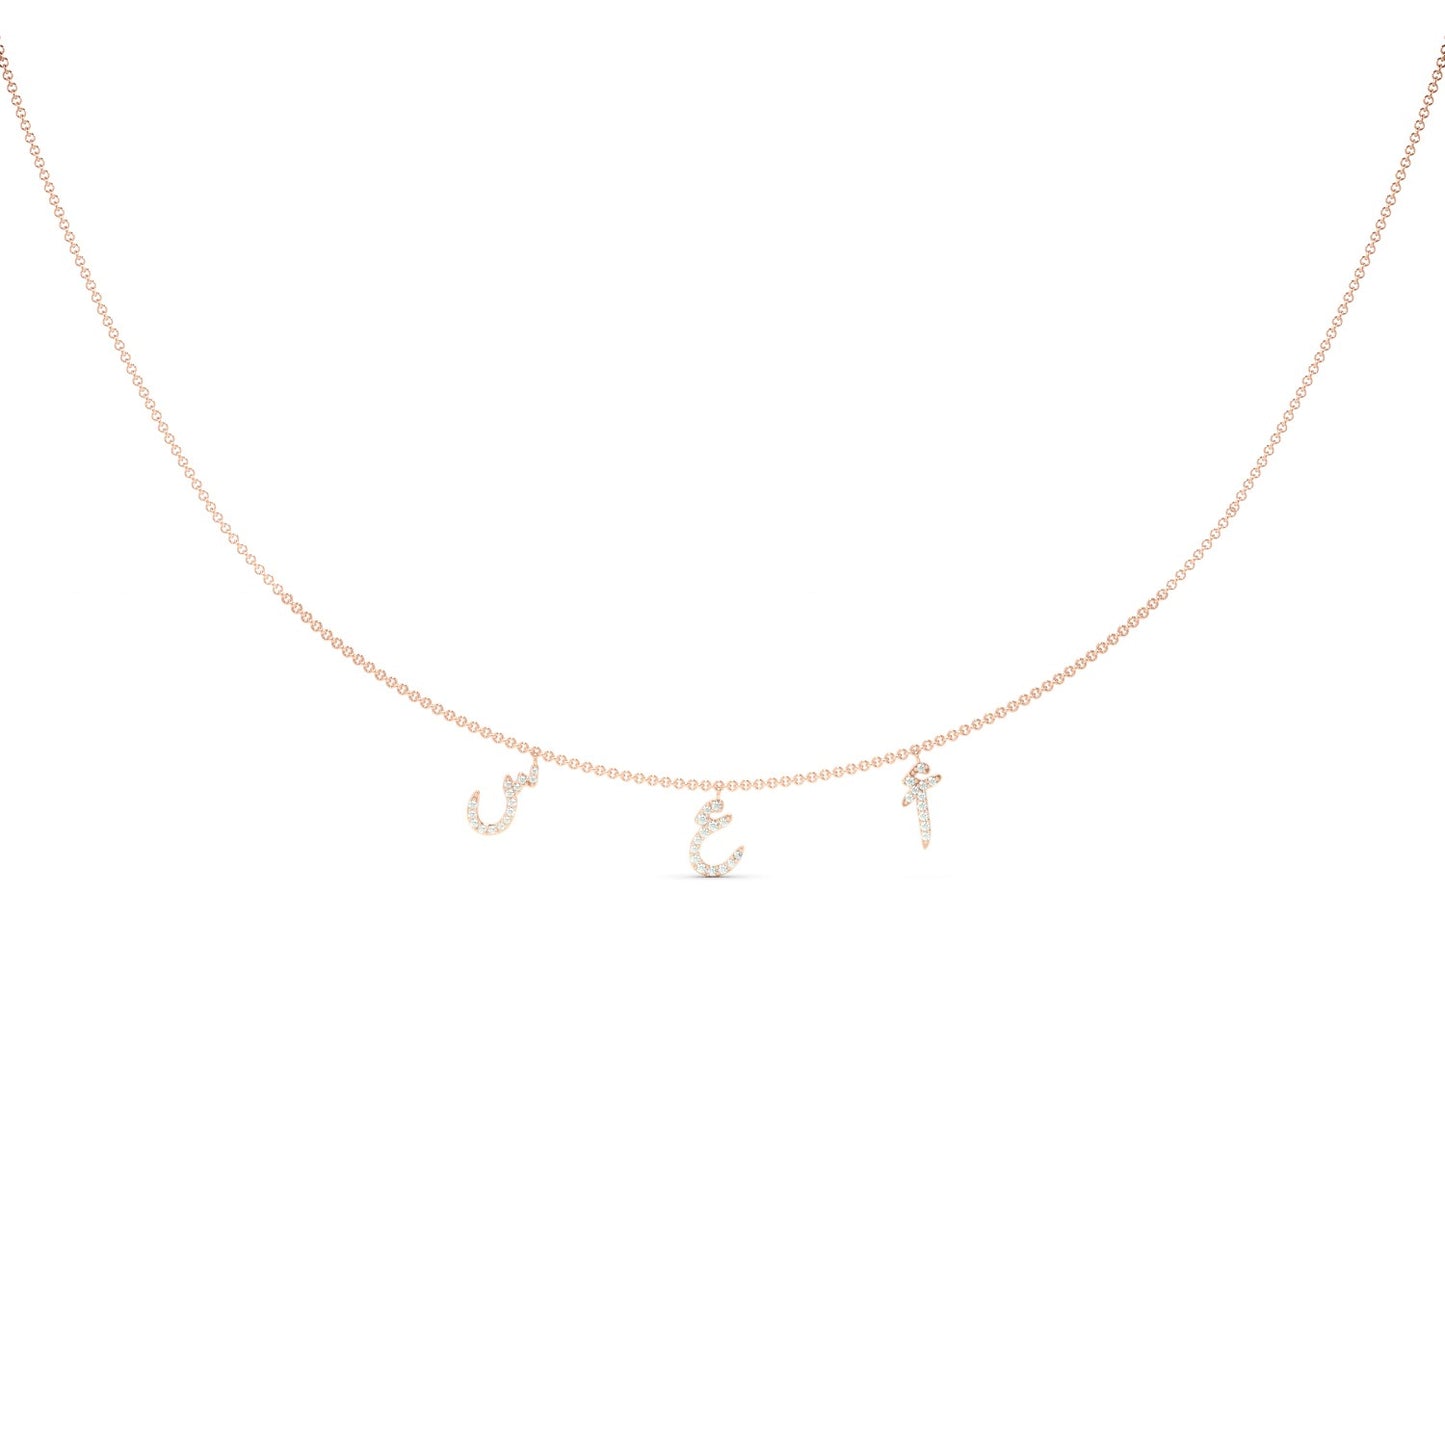 Customize your 3-Letter Pavé Diamond Necklace